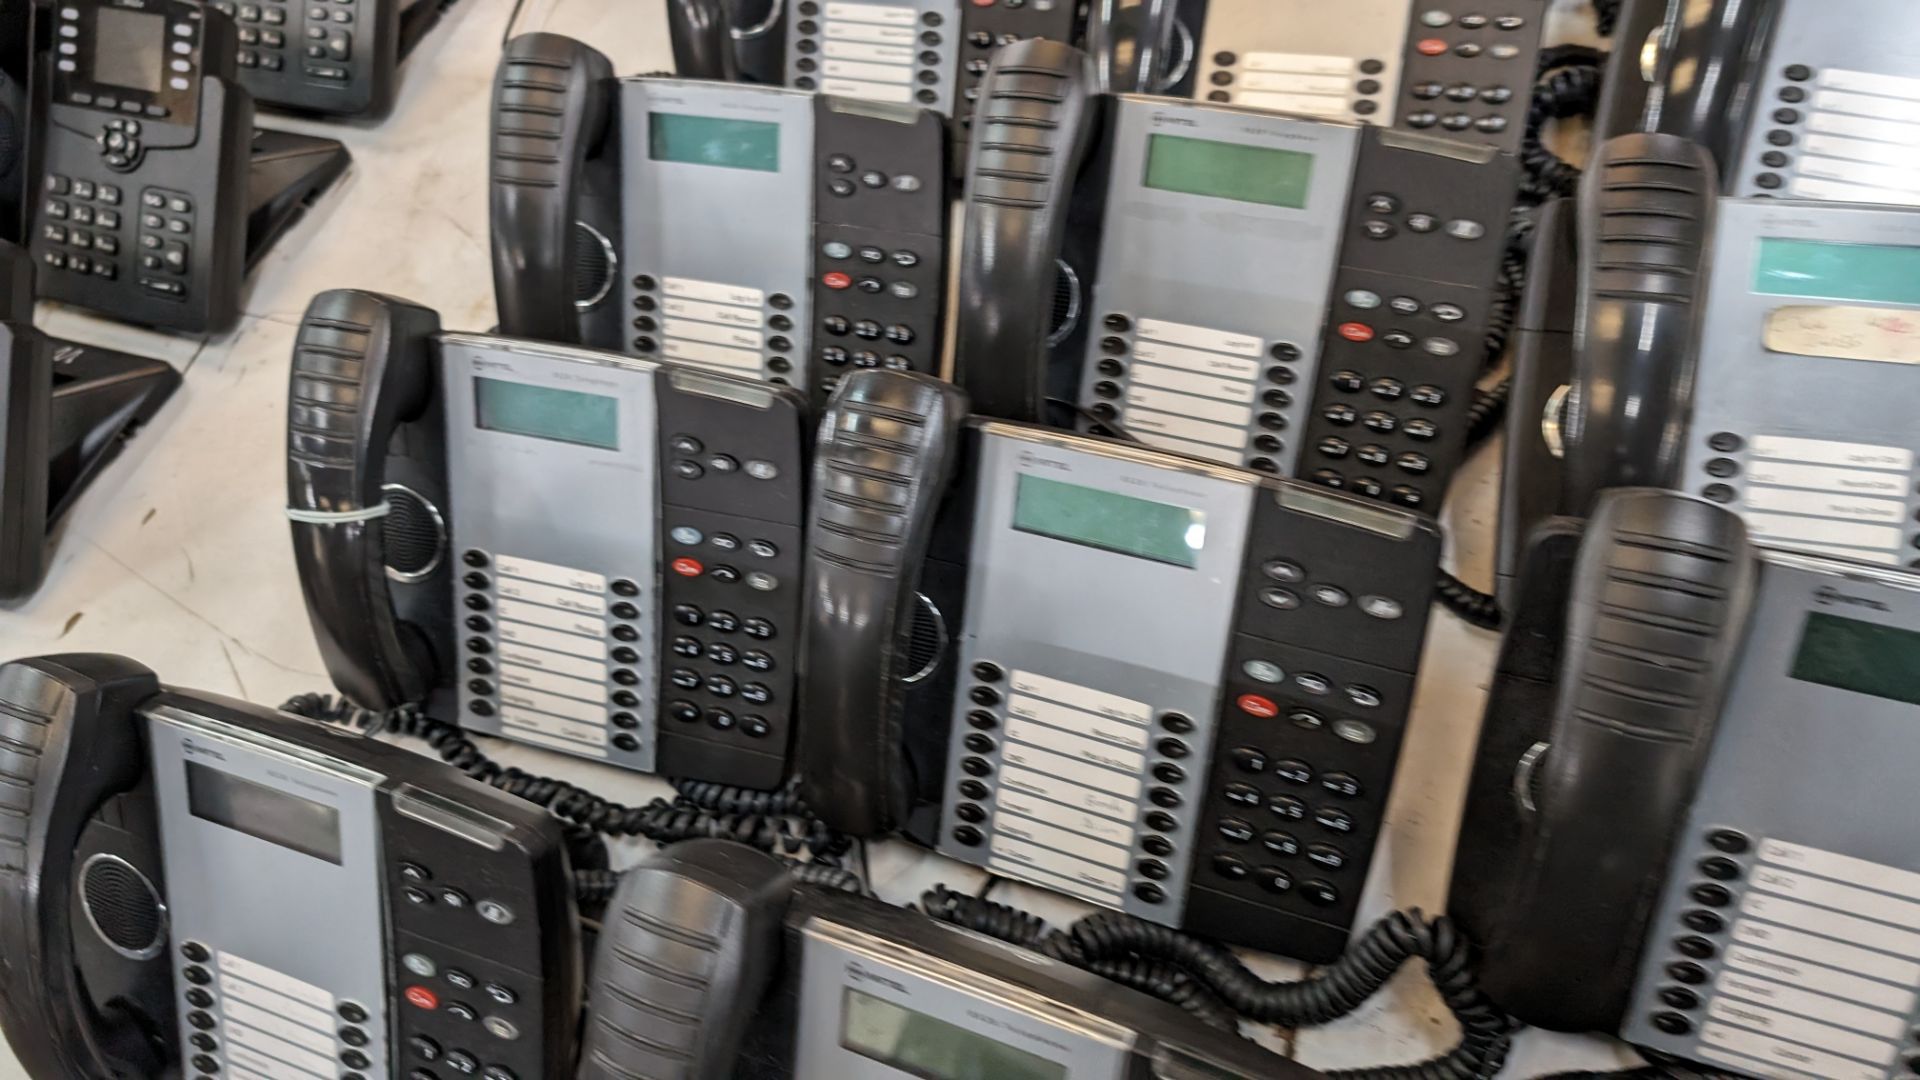 20 off Mitel model 8528 telephone handsets - Image 7 of 13